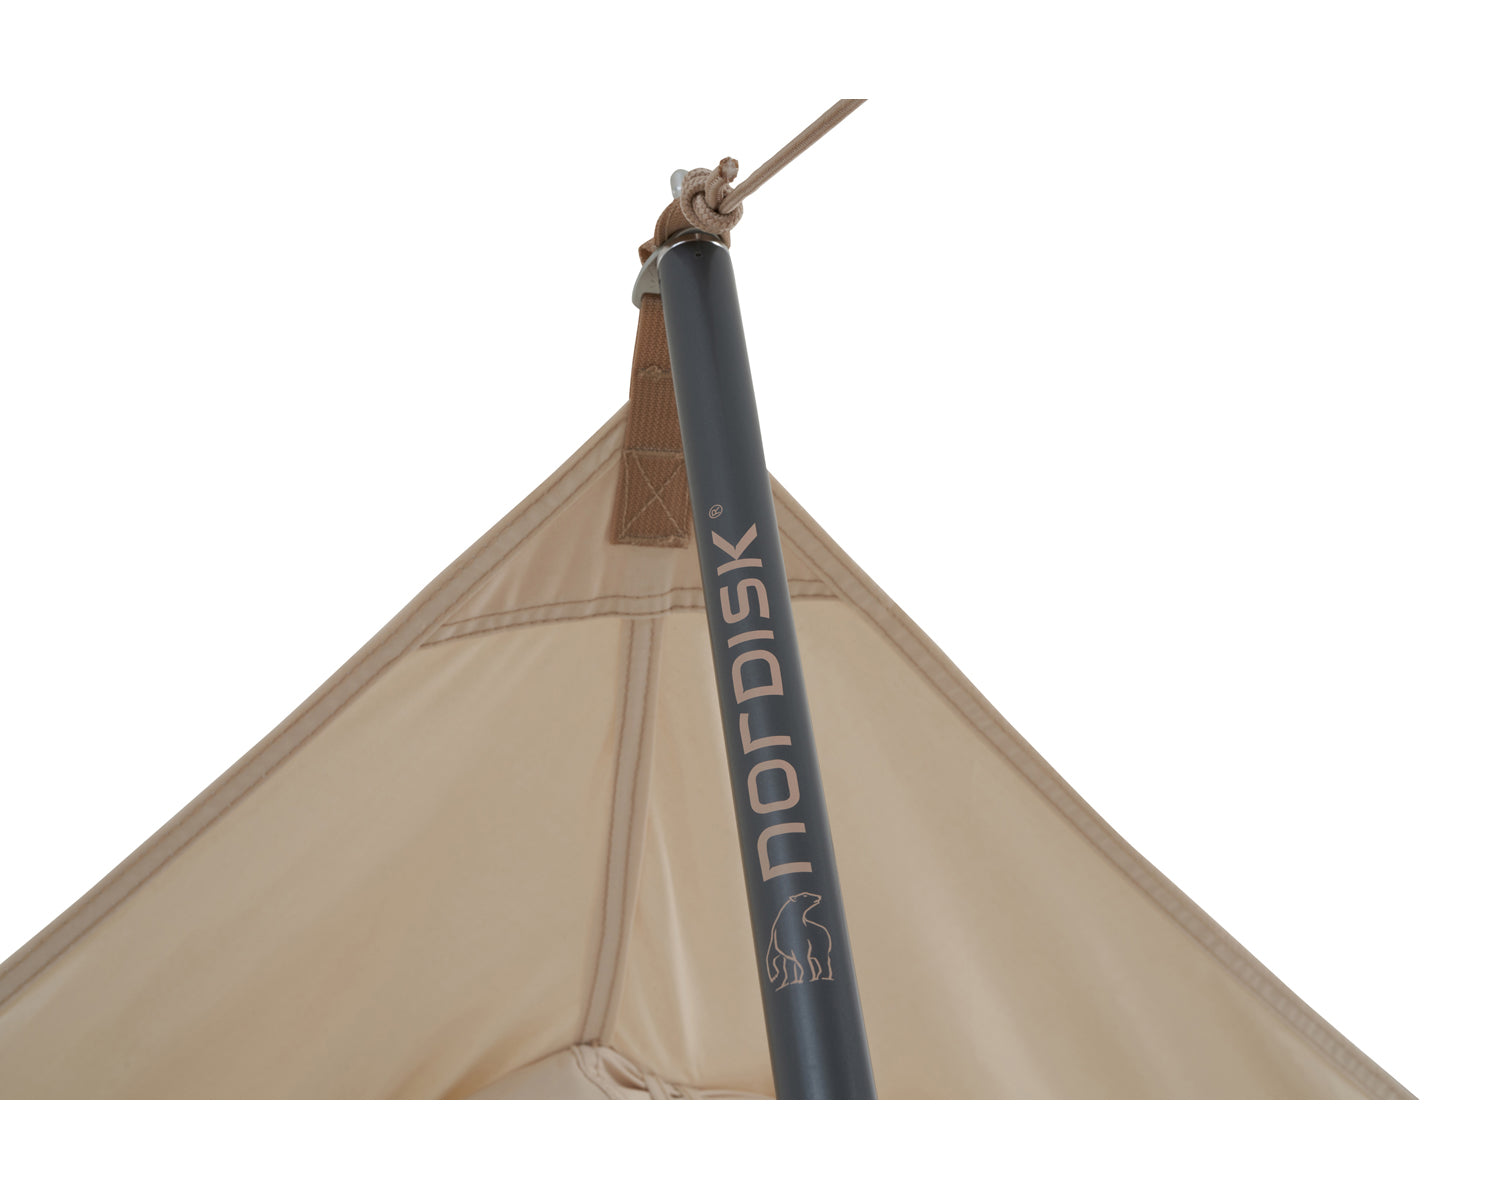 Ydun Sky glamping tent - 4 person - Sandshell